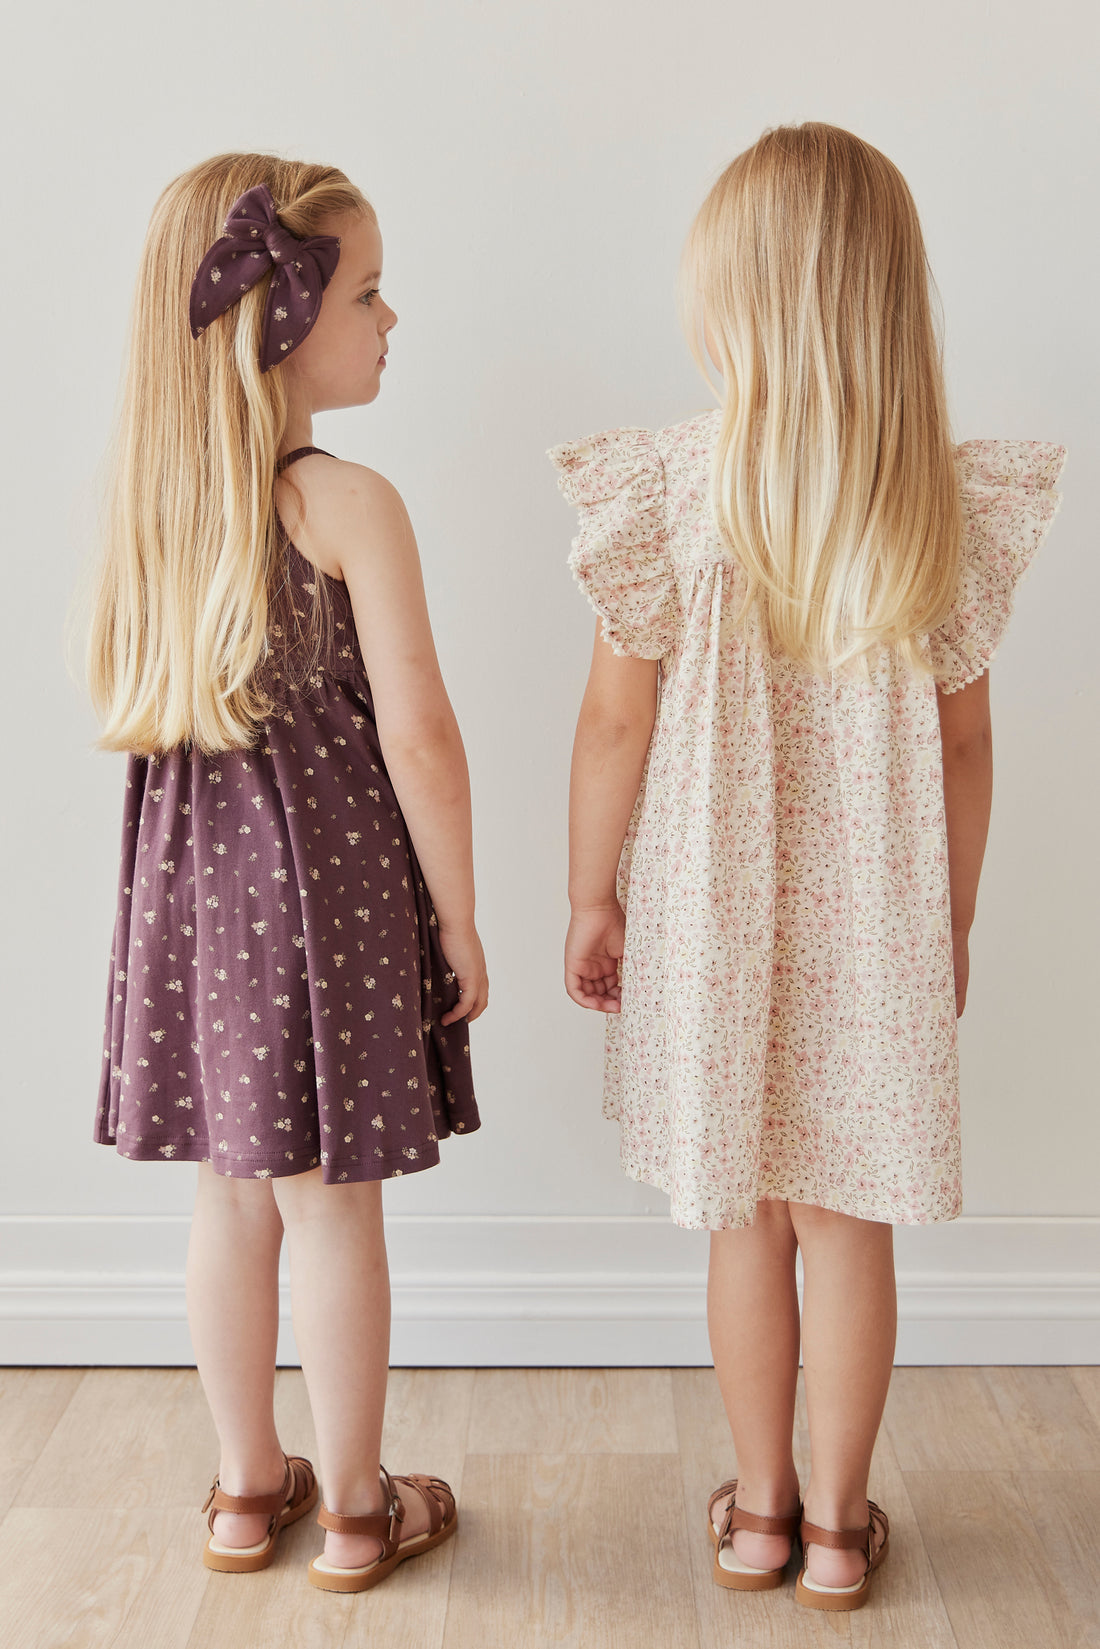 Organic Cotton Eleanor Dress - Fifi Floral Childrens Dress from Jamie Kay NZ